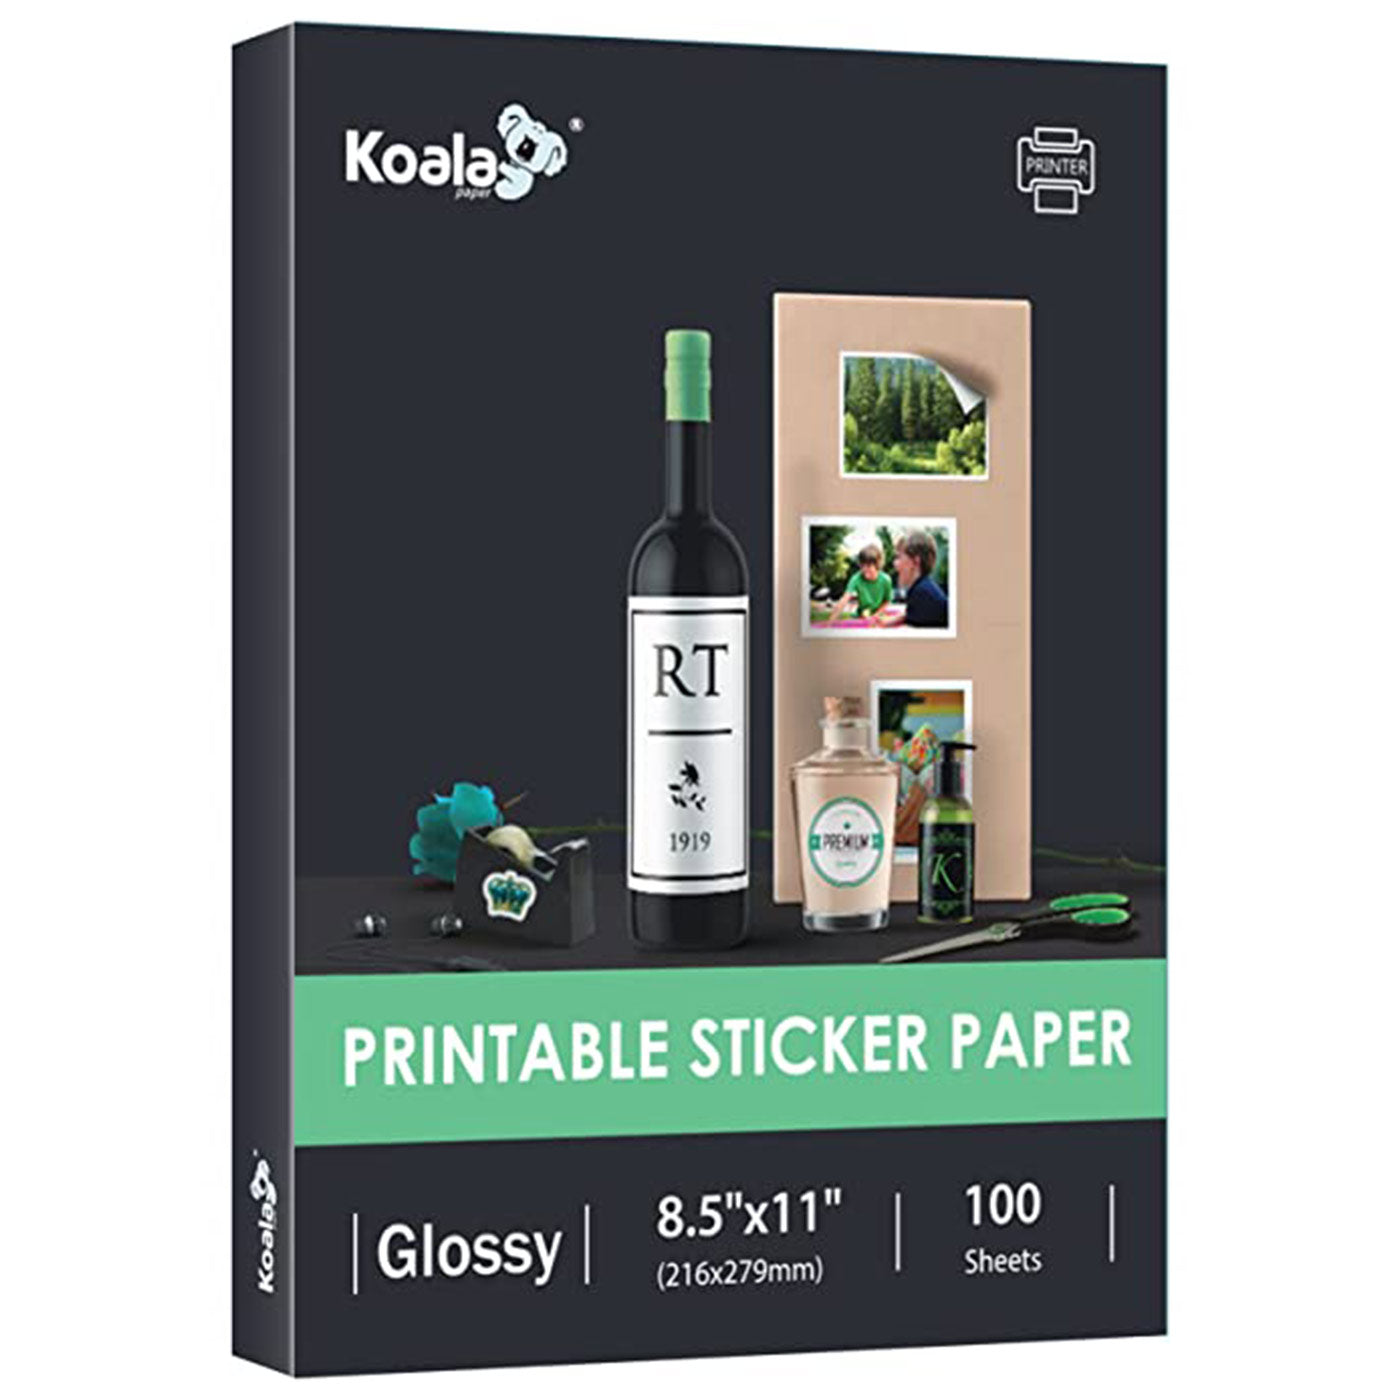 Koala Printable Glossy Photo Sticker Paper for Inkjet Printers